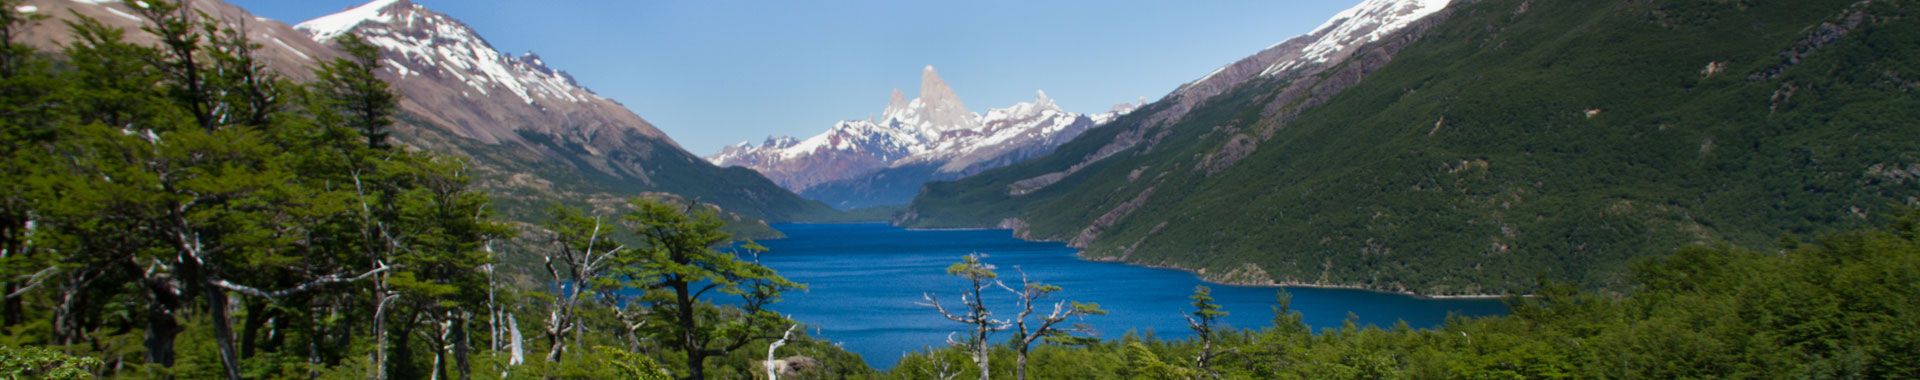 Chile - Patagonia - Lugares